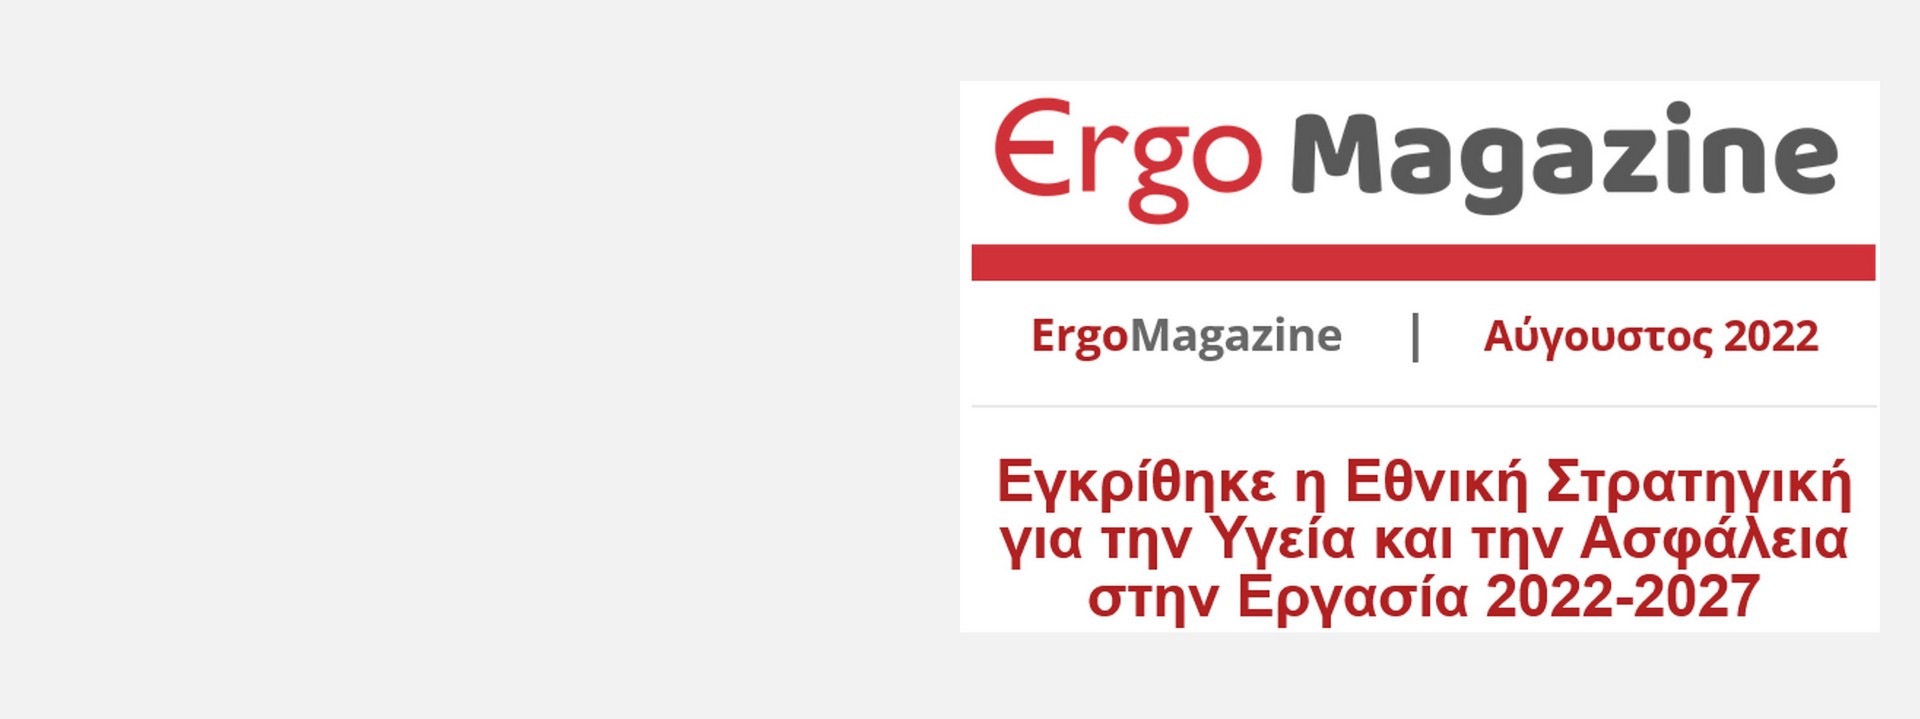 ErgoMagazine Αύγουστος 2022 